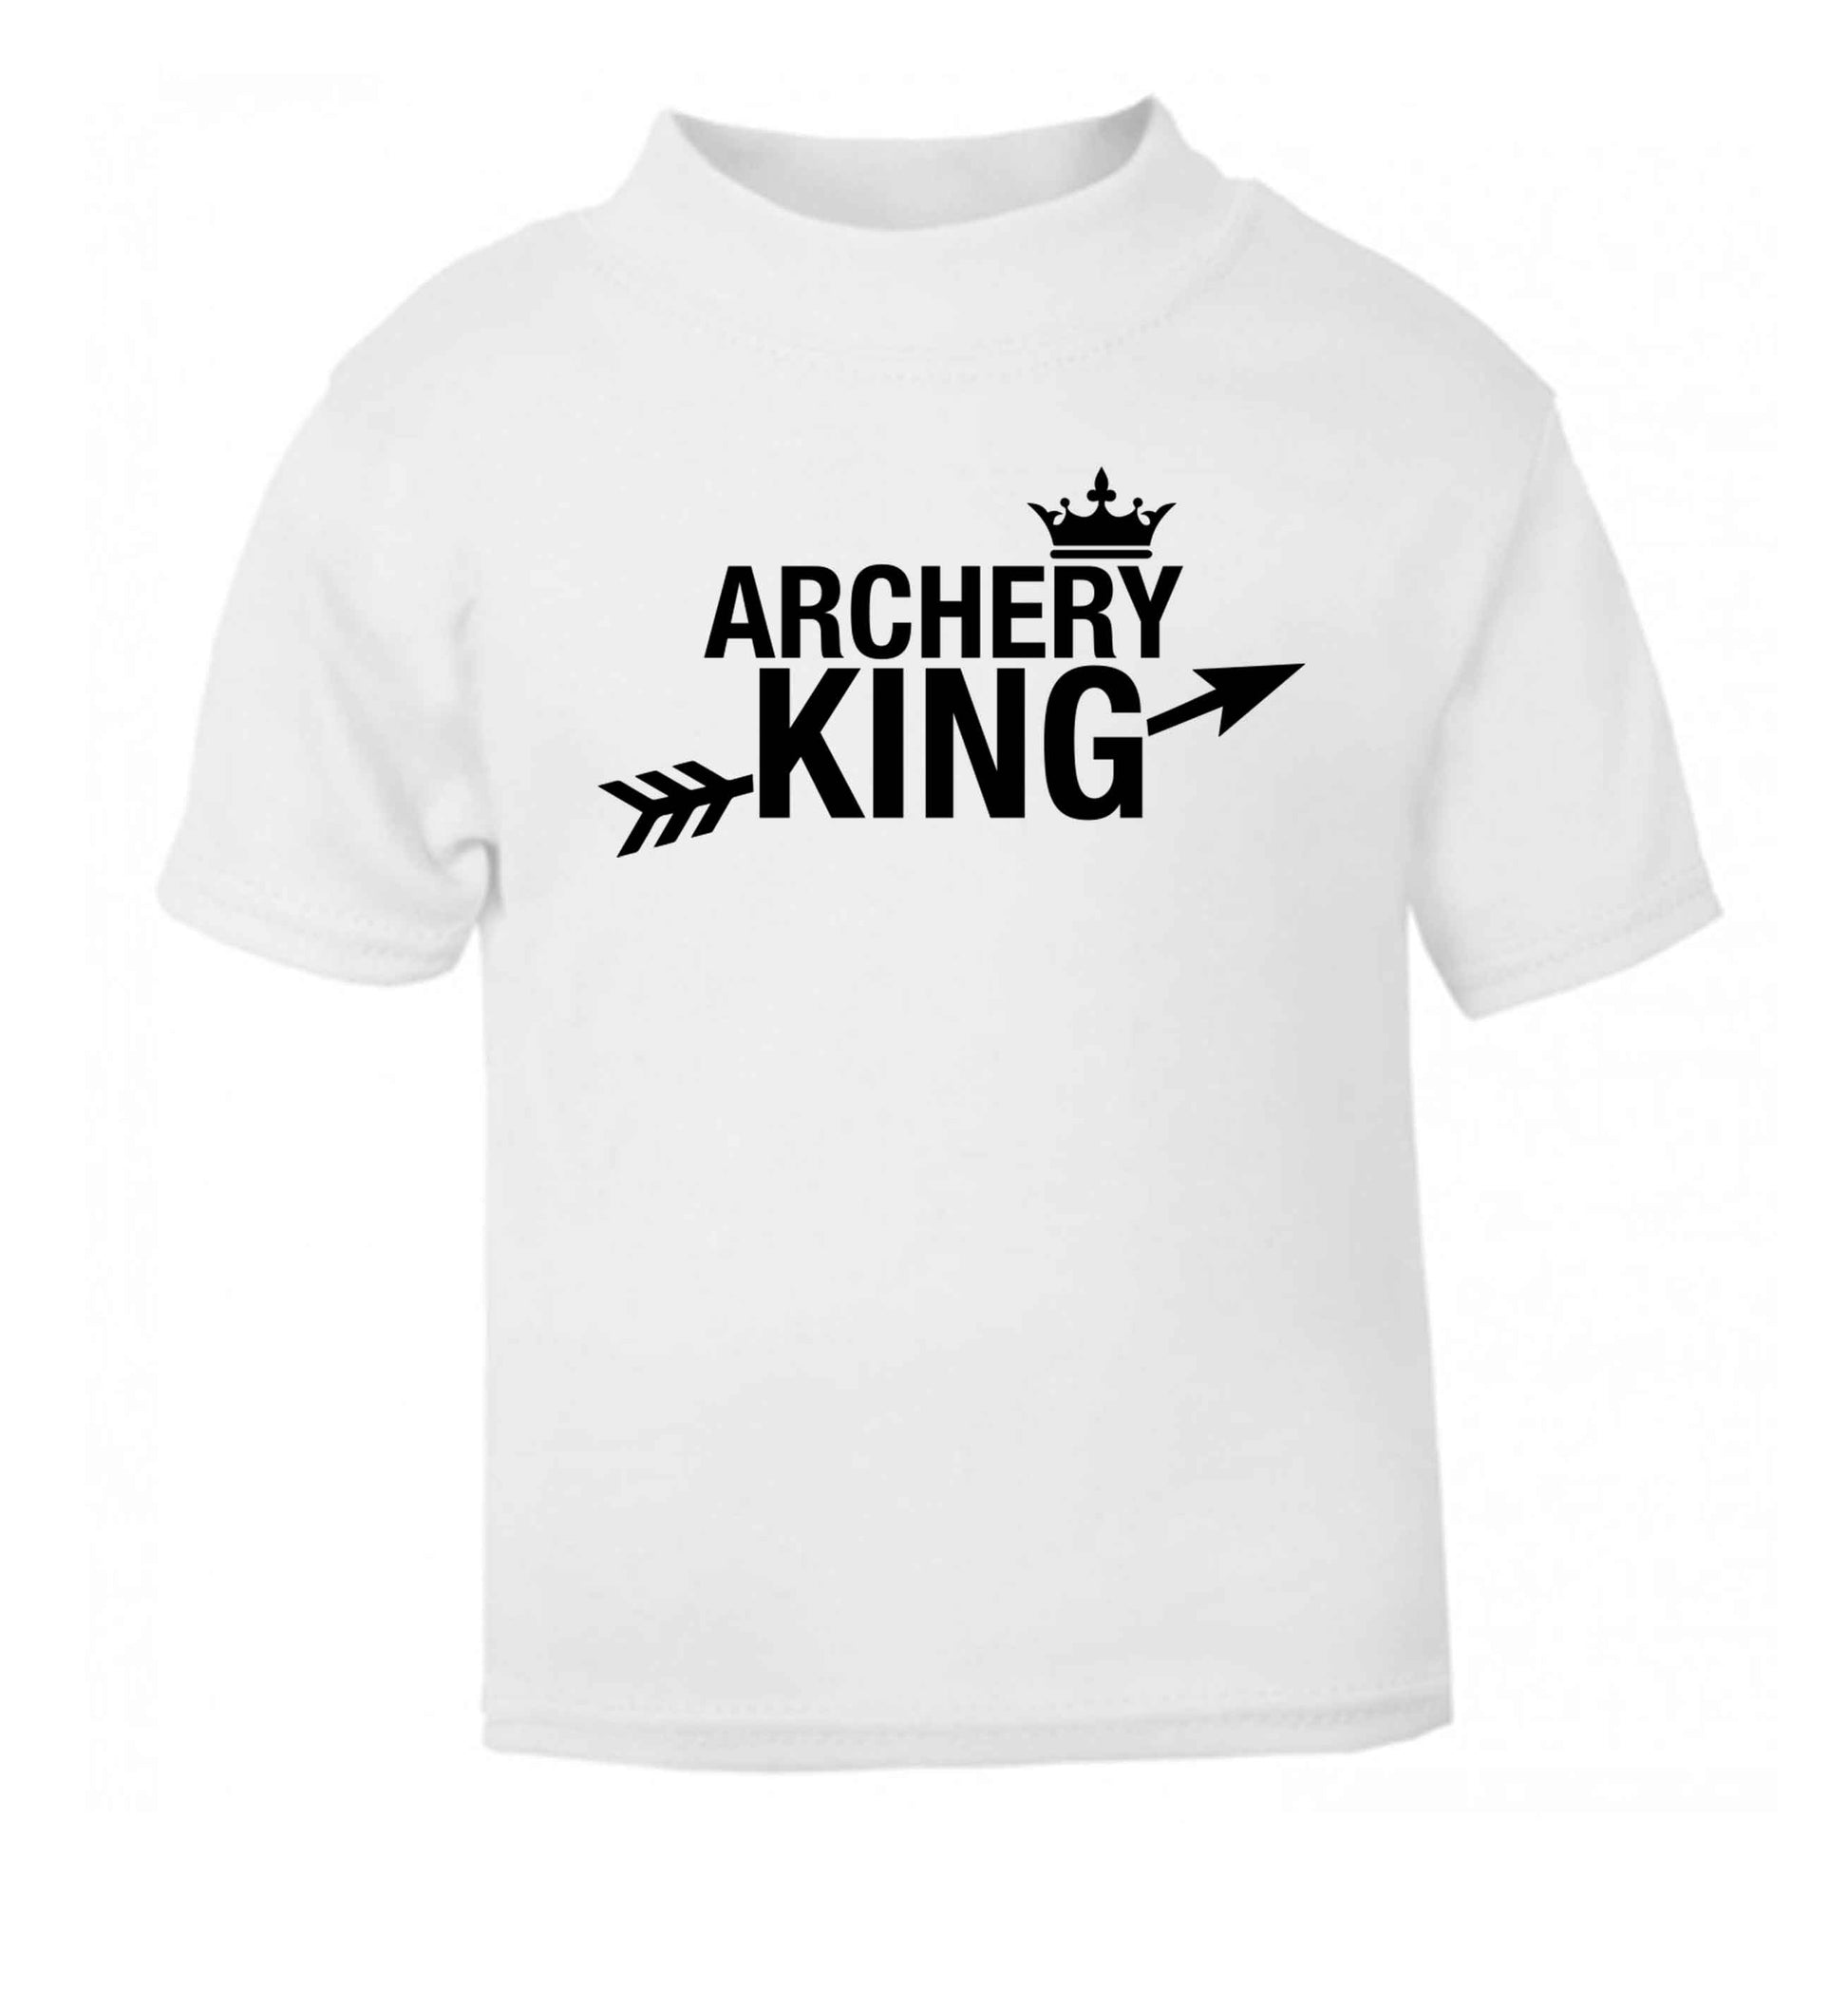 Archery king white Baby Toddler Tshirt 2 Years